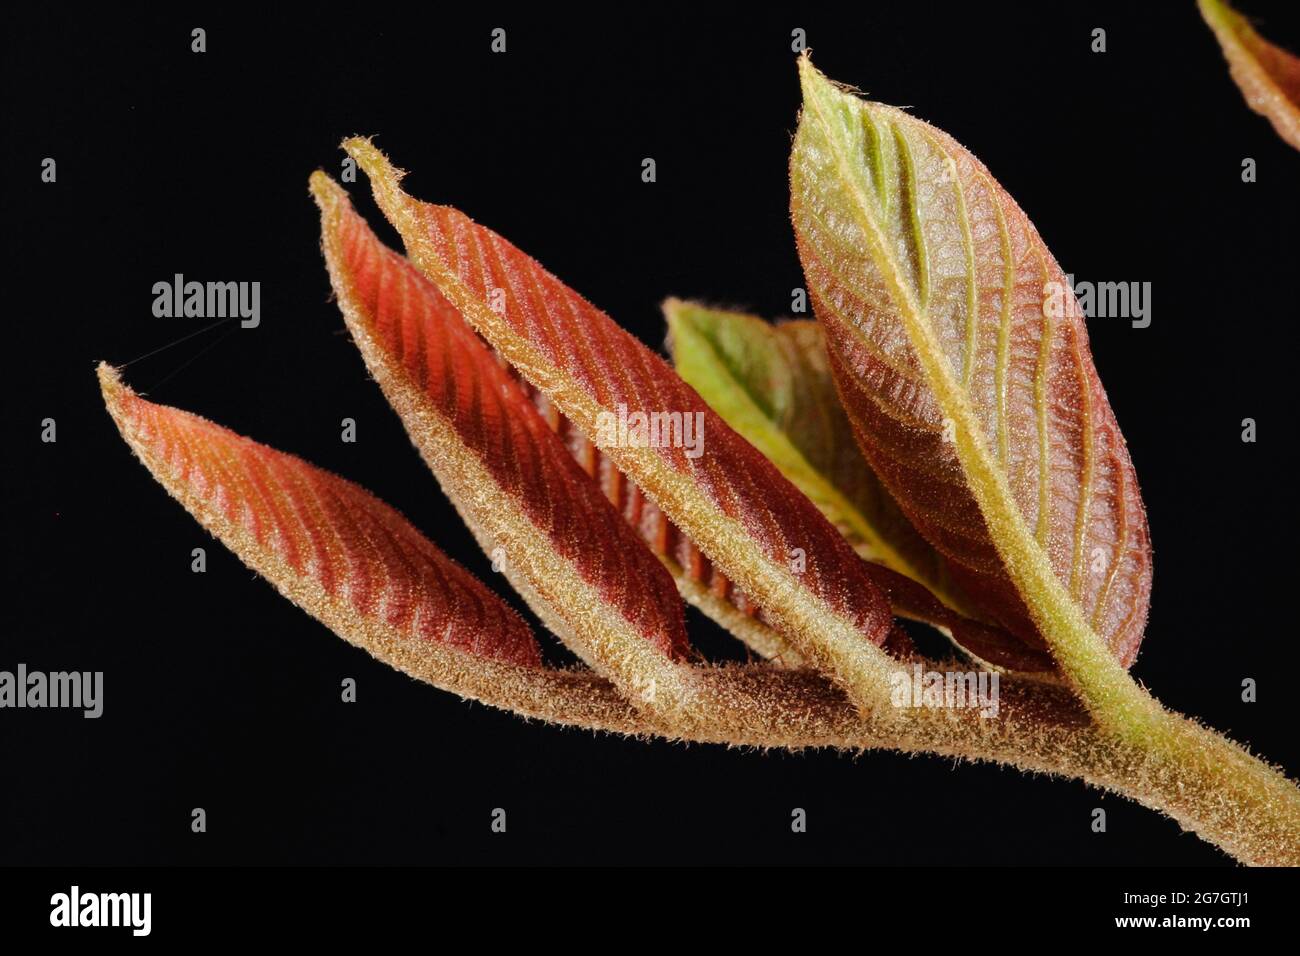 walnut (Juglans regia), shooting leaf against black background Stock Photo